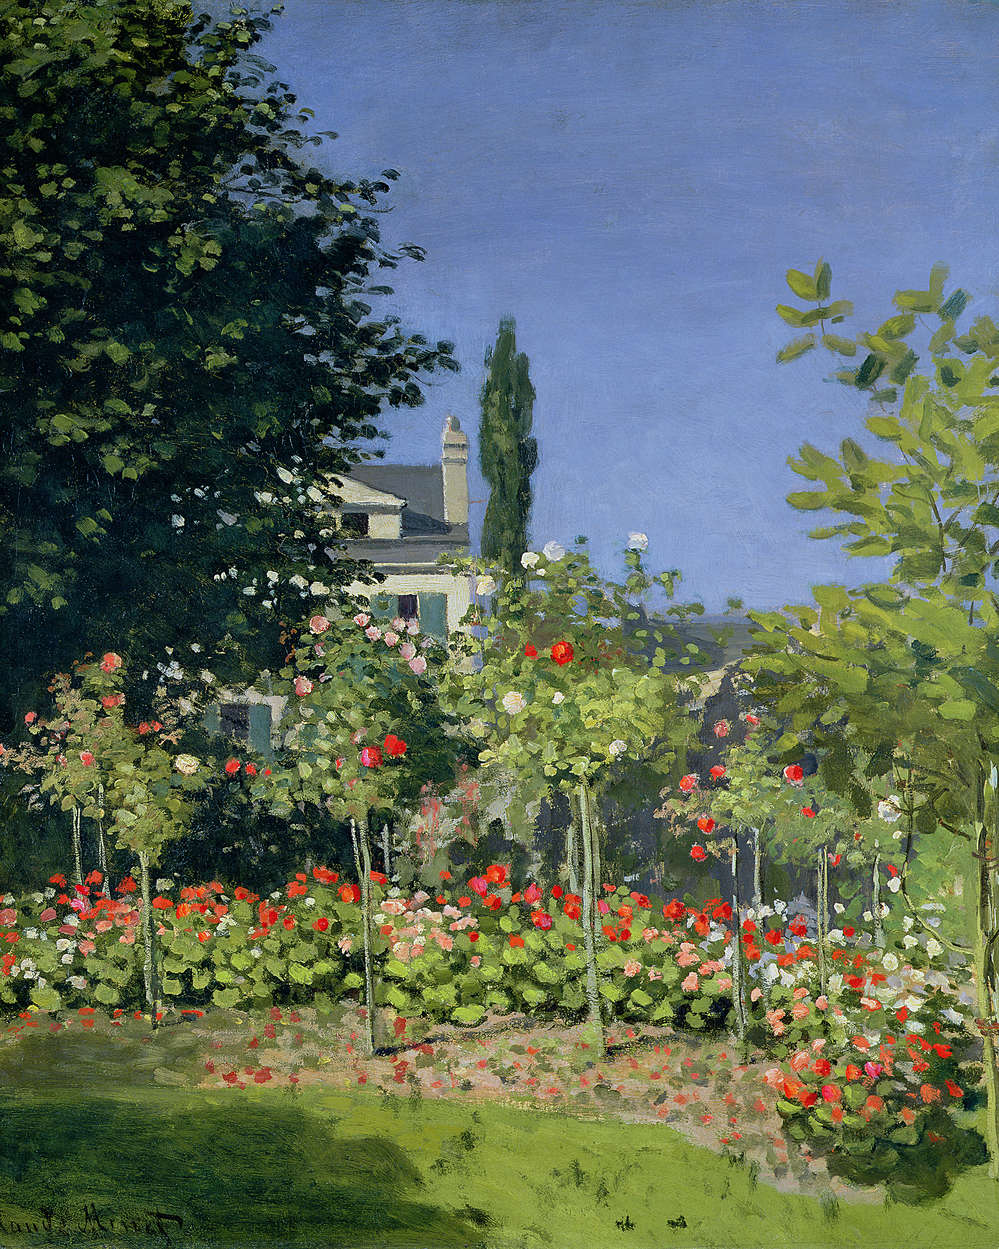             Mural "Jardín florido en SainteAdresse" de Claude Monet
        